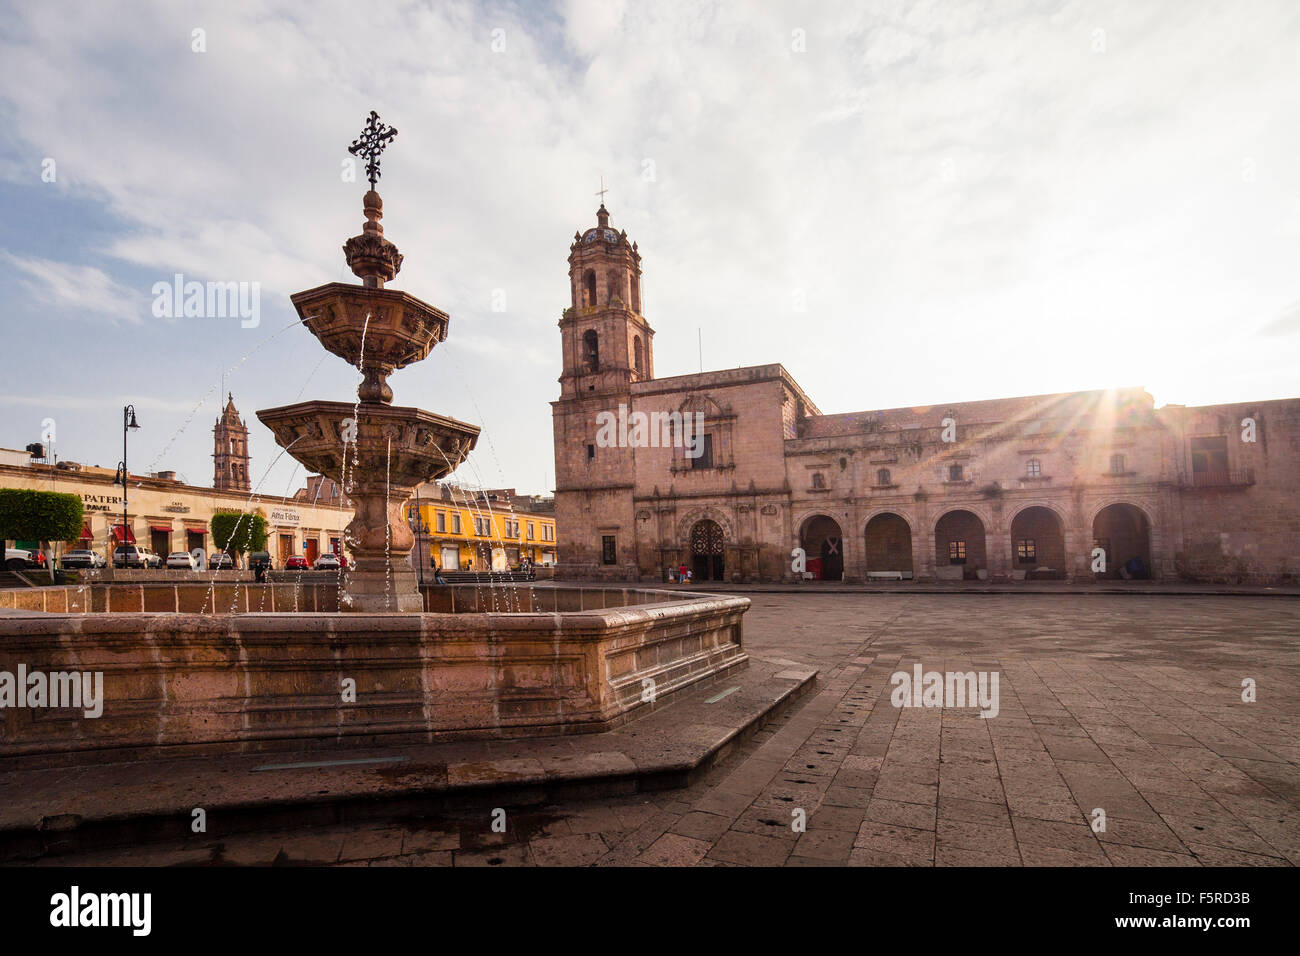 Am frühen Morgen in der Plaza San Francisco Kirche in Morelia, Michoacan, Mexiko. Stockfoto